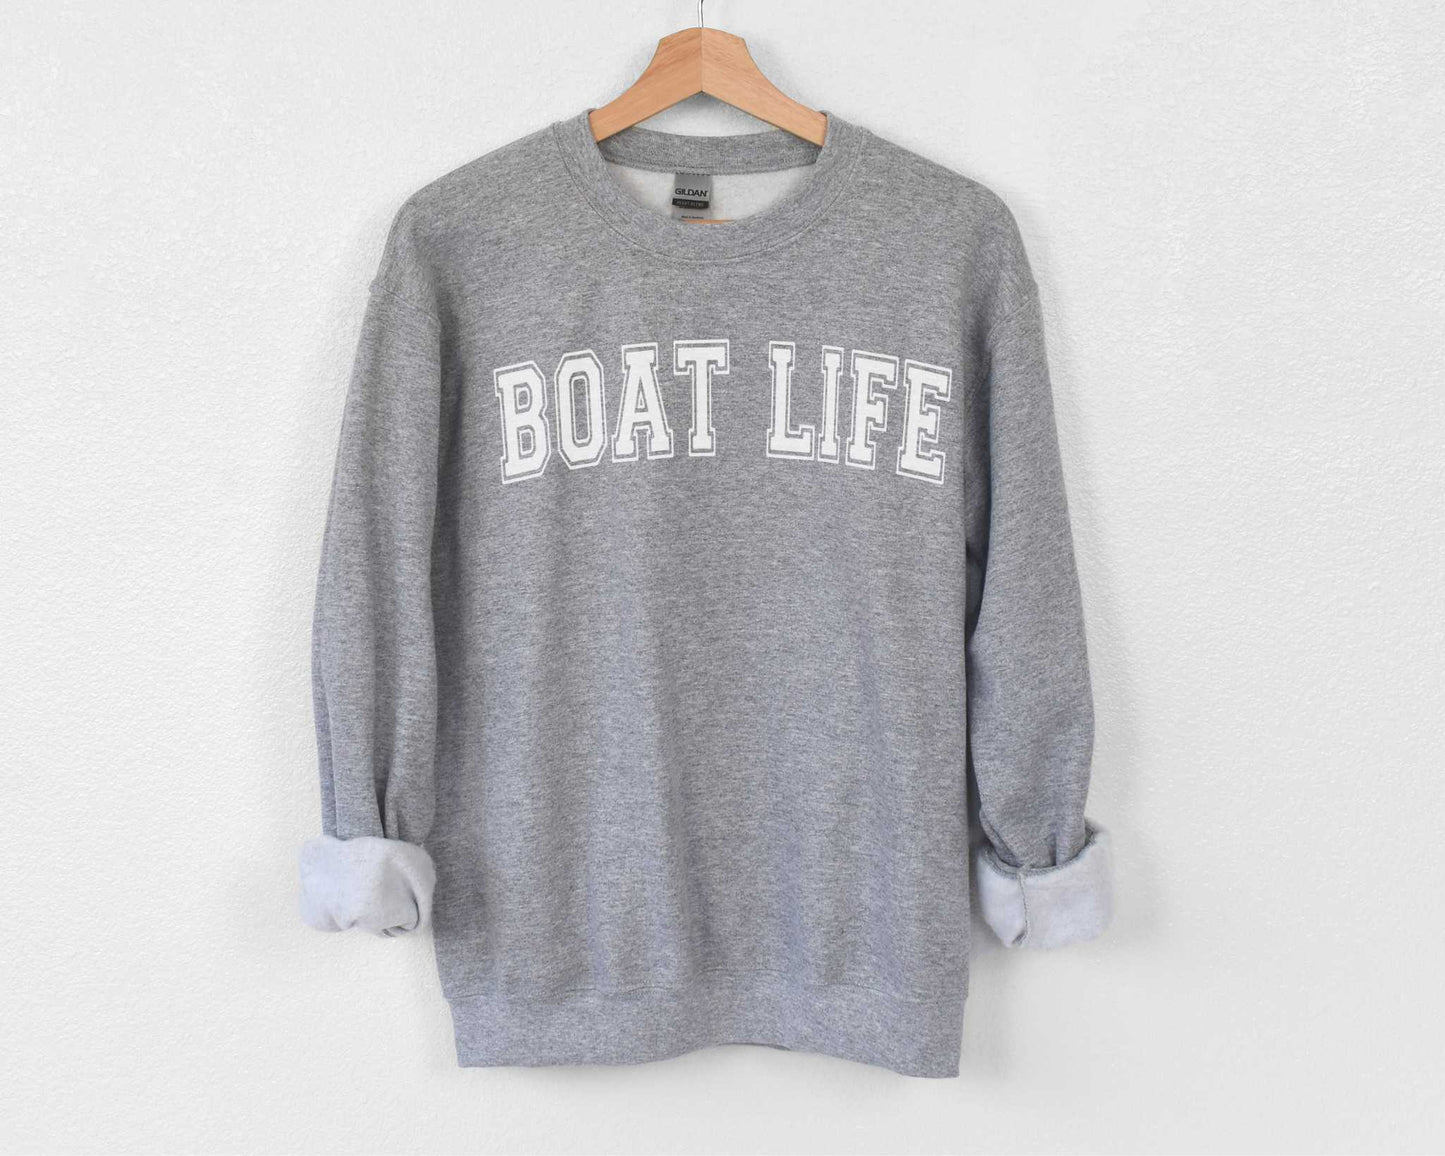 Boat Life Sweatshirt in Sport Gray